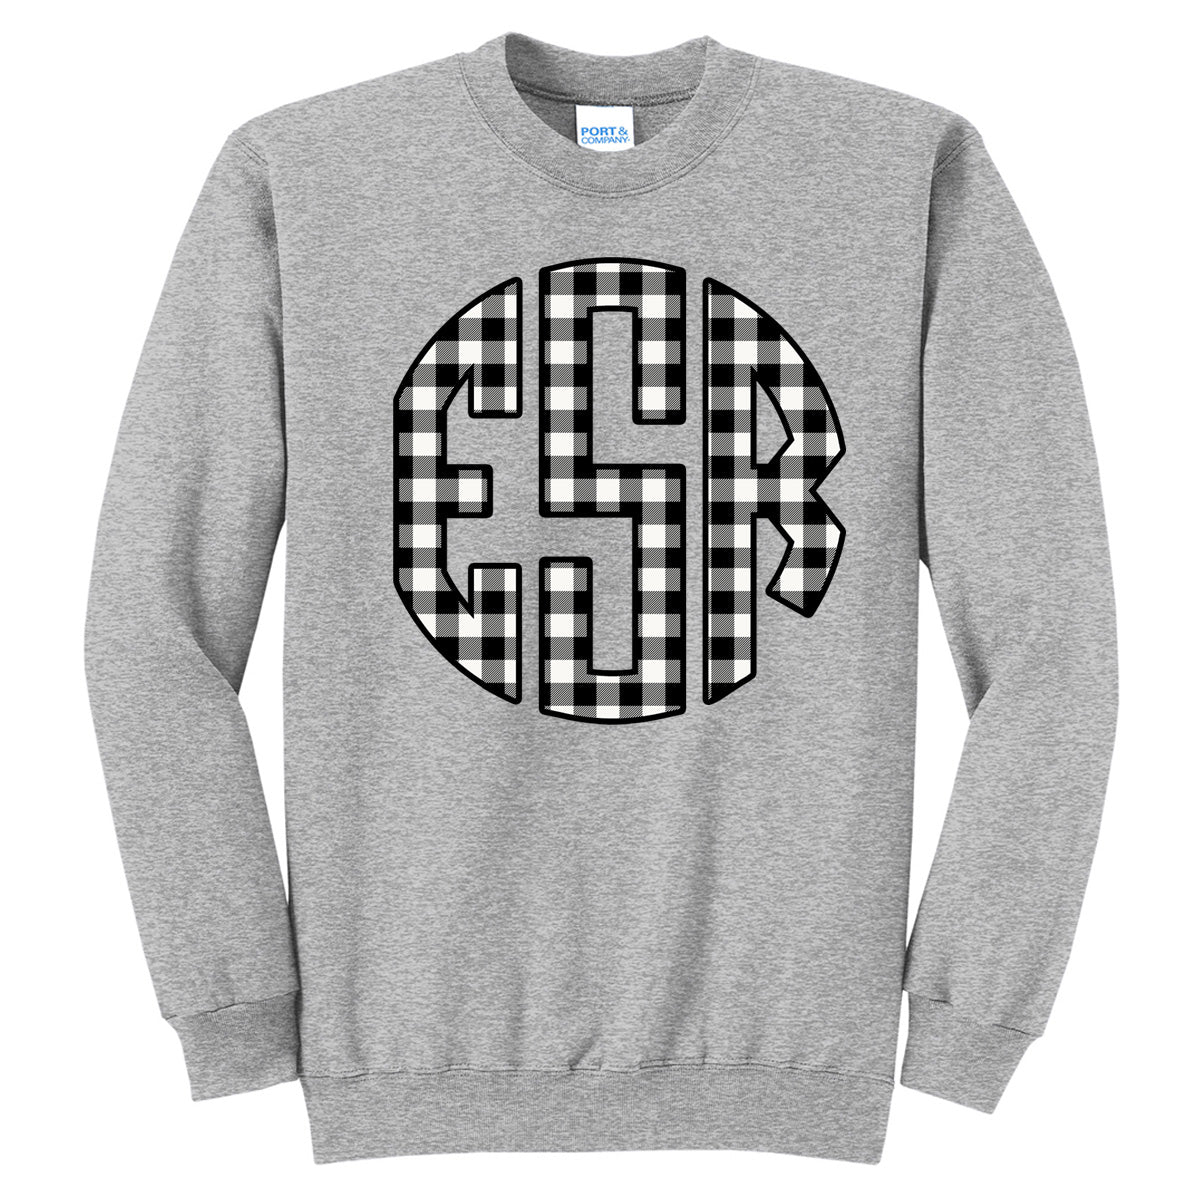 Black & White Plaid Circle Monogram - Athletic Heather Sweatshirt - Southern Grace Creations